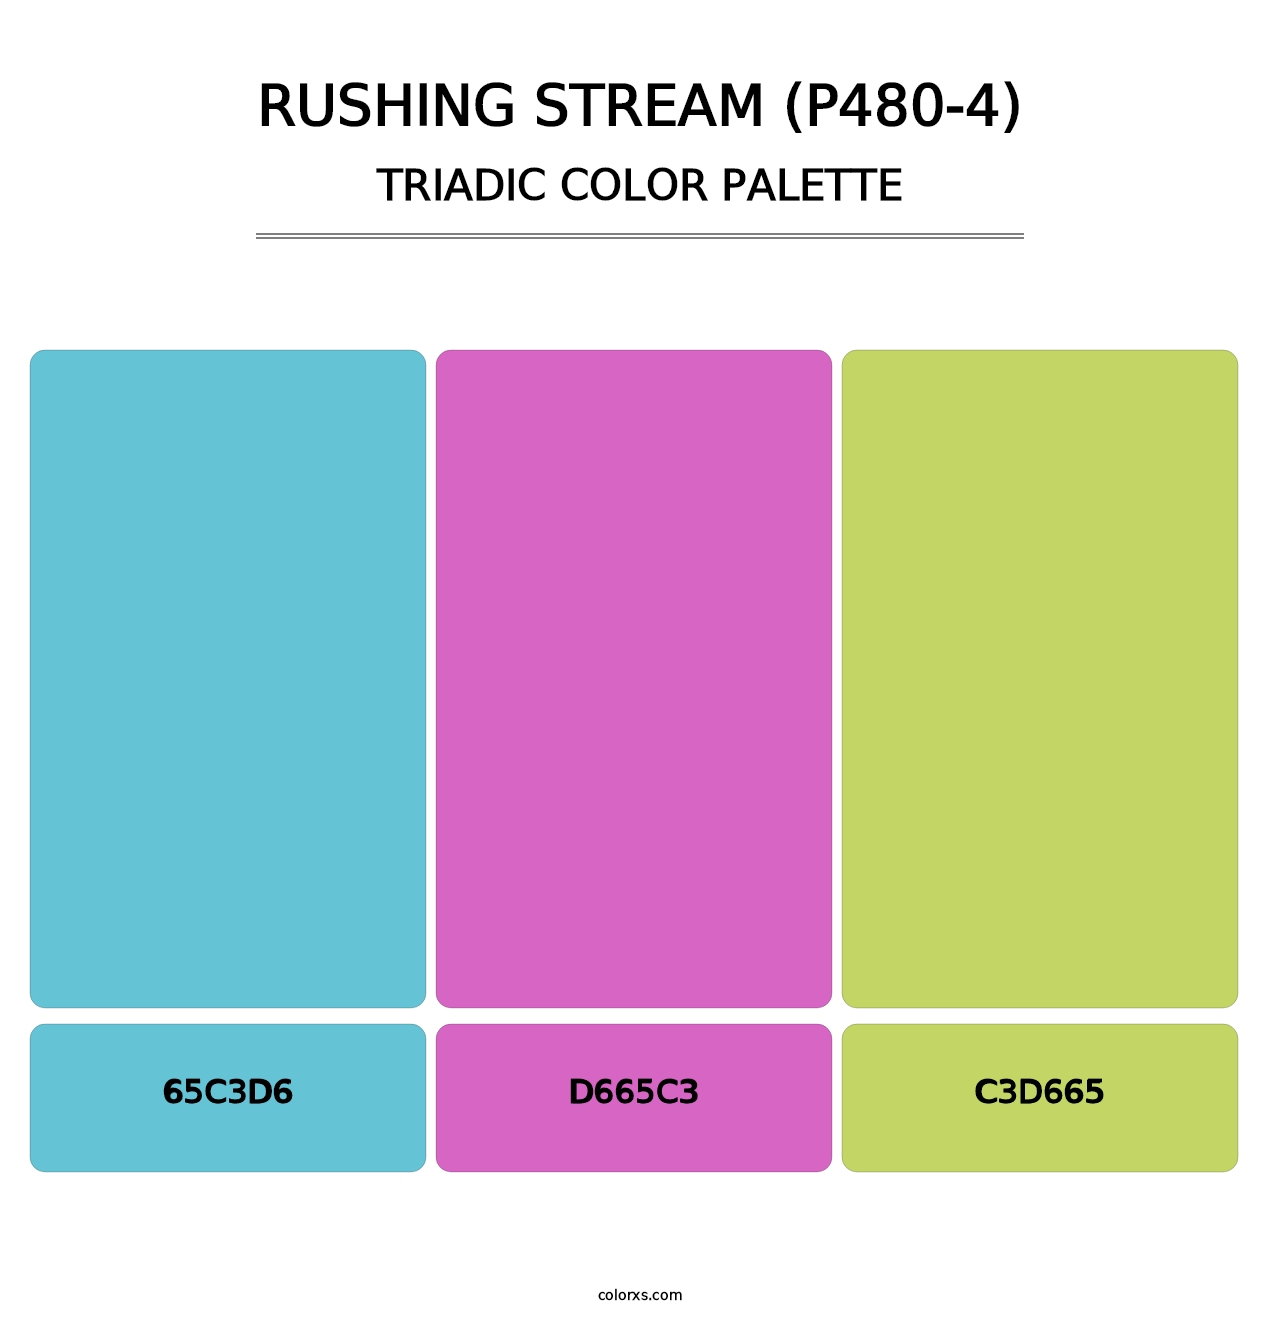 Rushing Stream (P480-4) - Triadic Color Palette